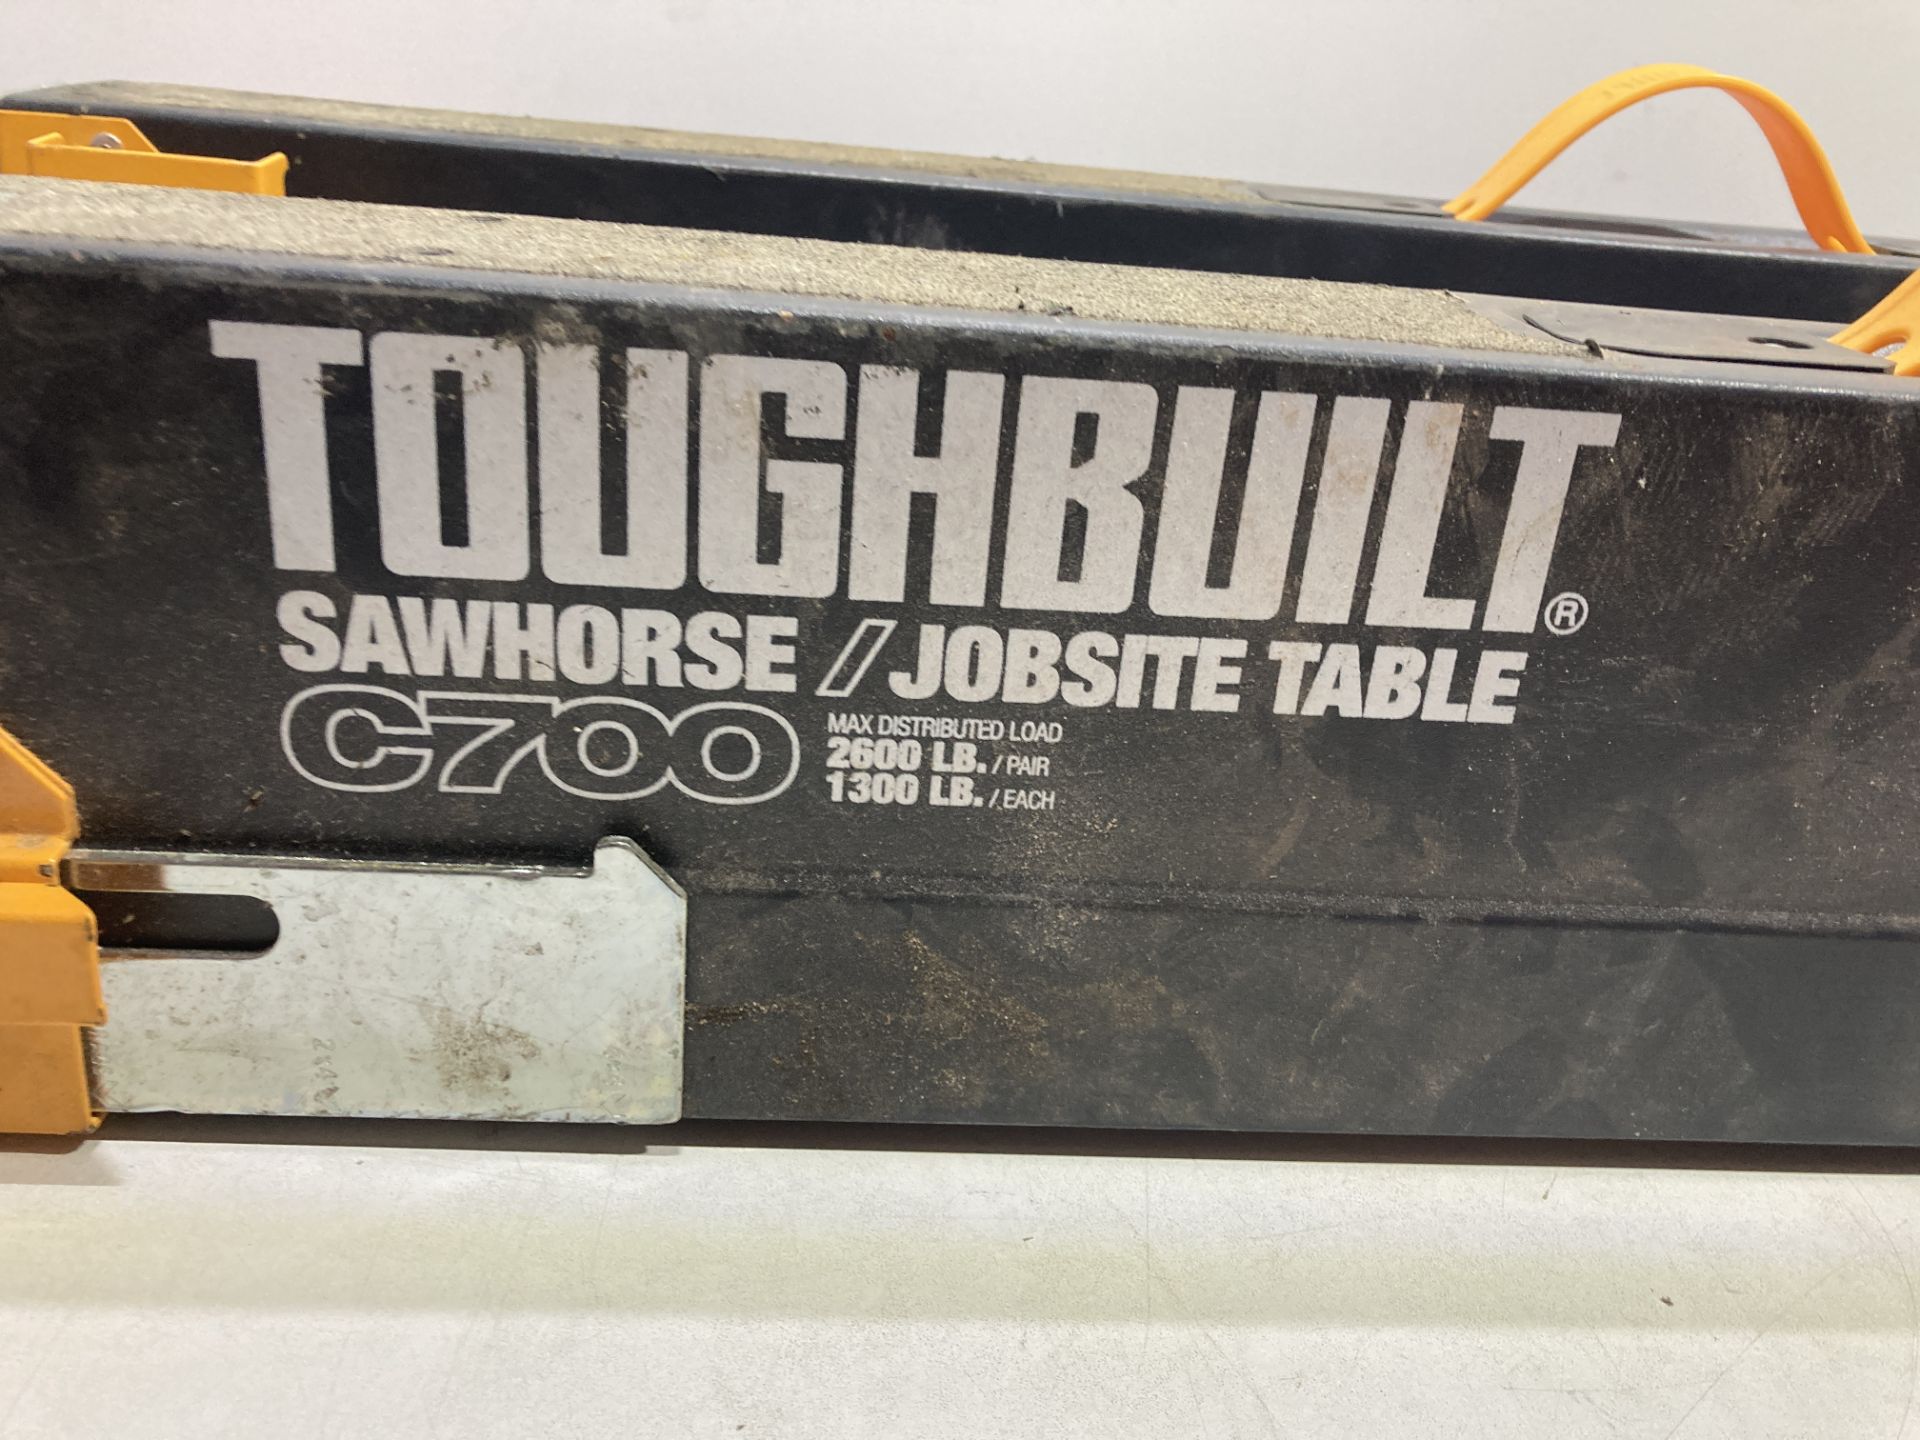 2 x Toughbuilt C700 Sawhorse/Jobsite Tables - Image 5 of 5